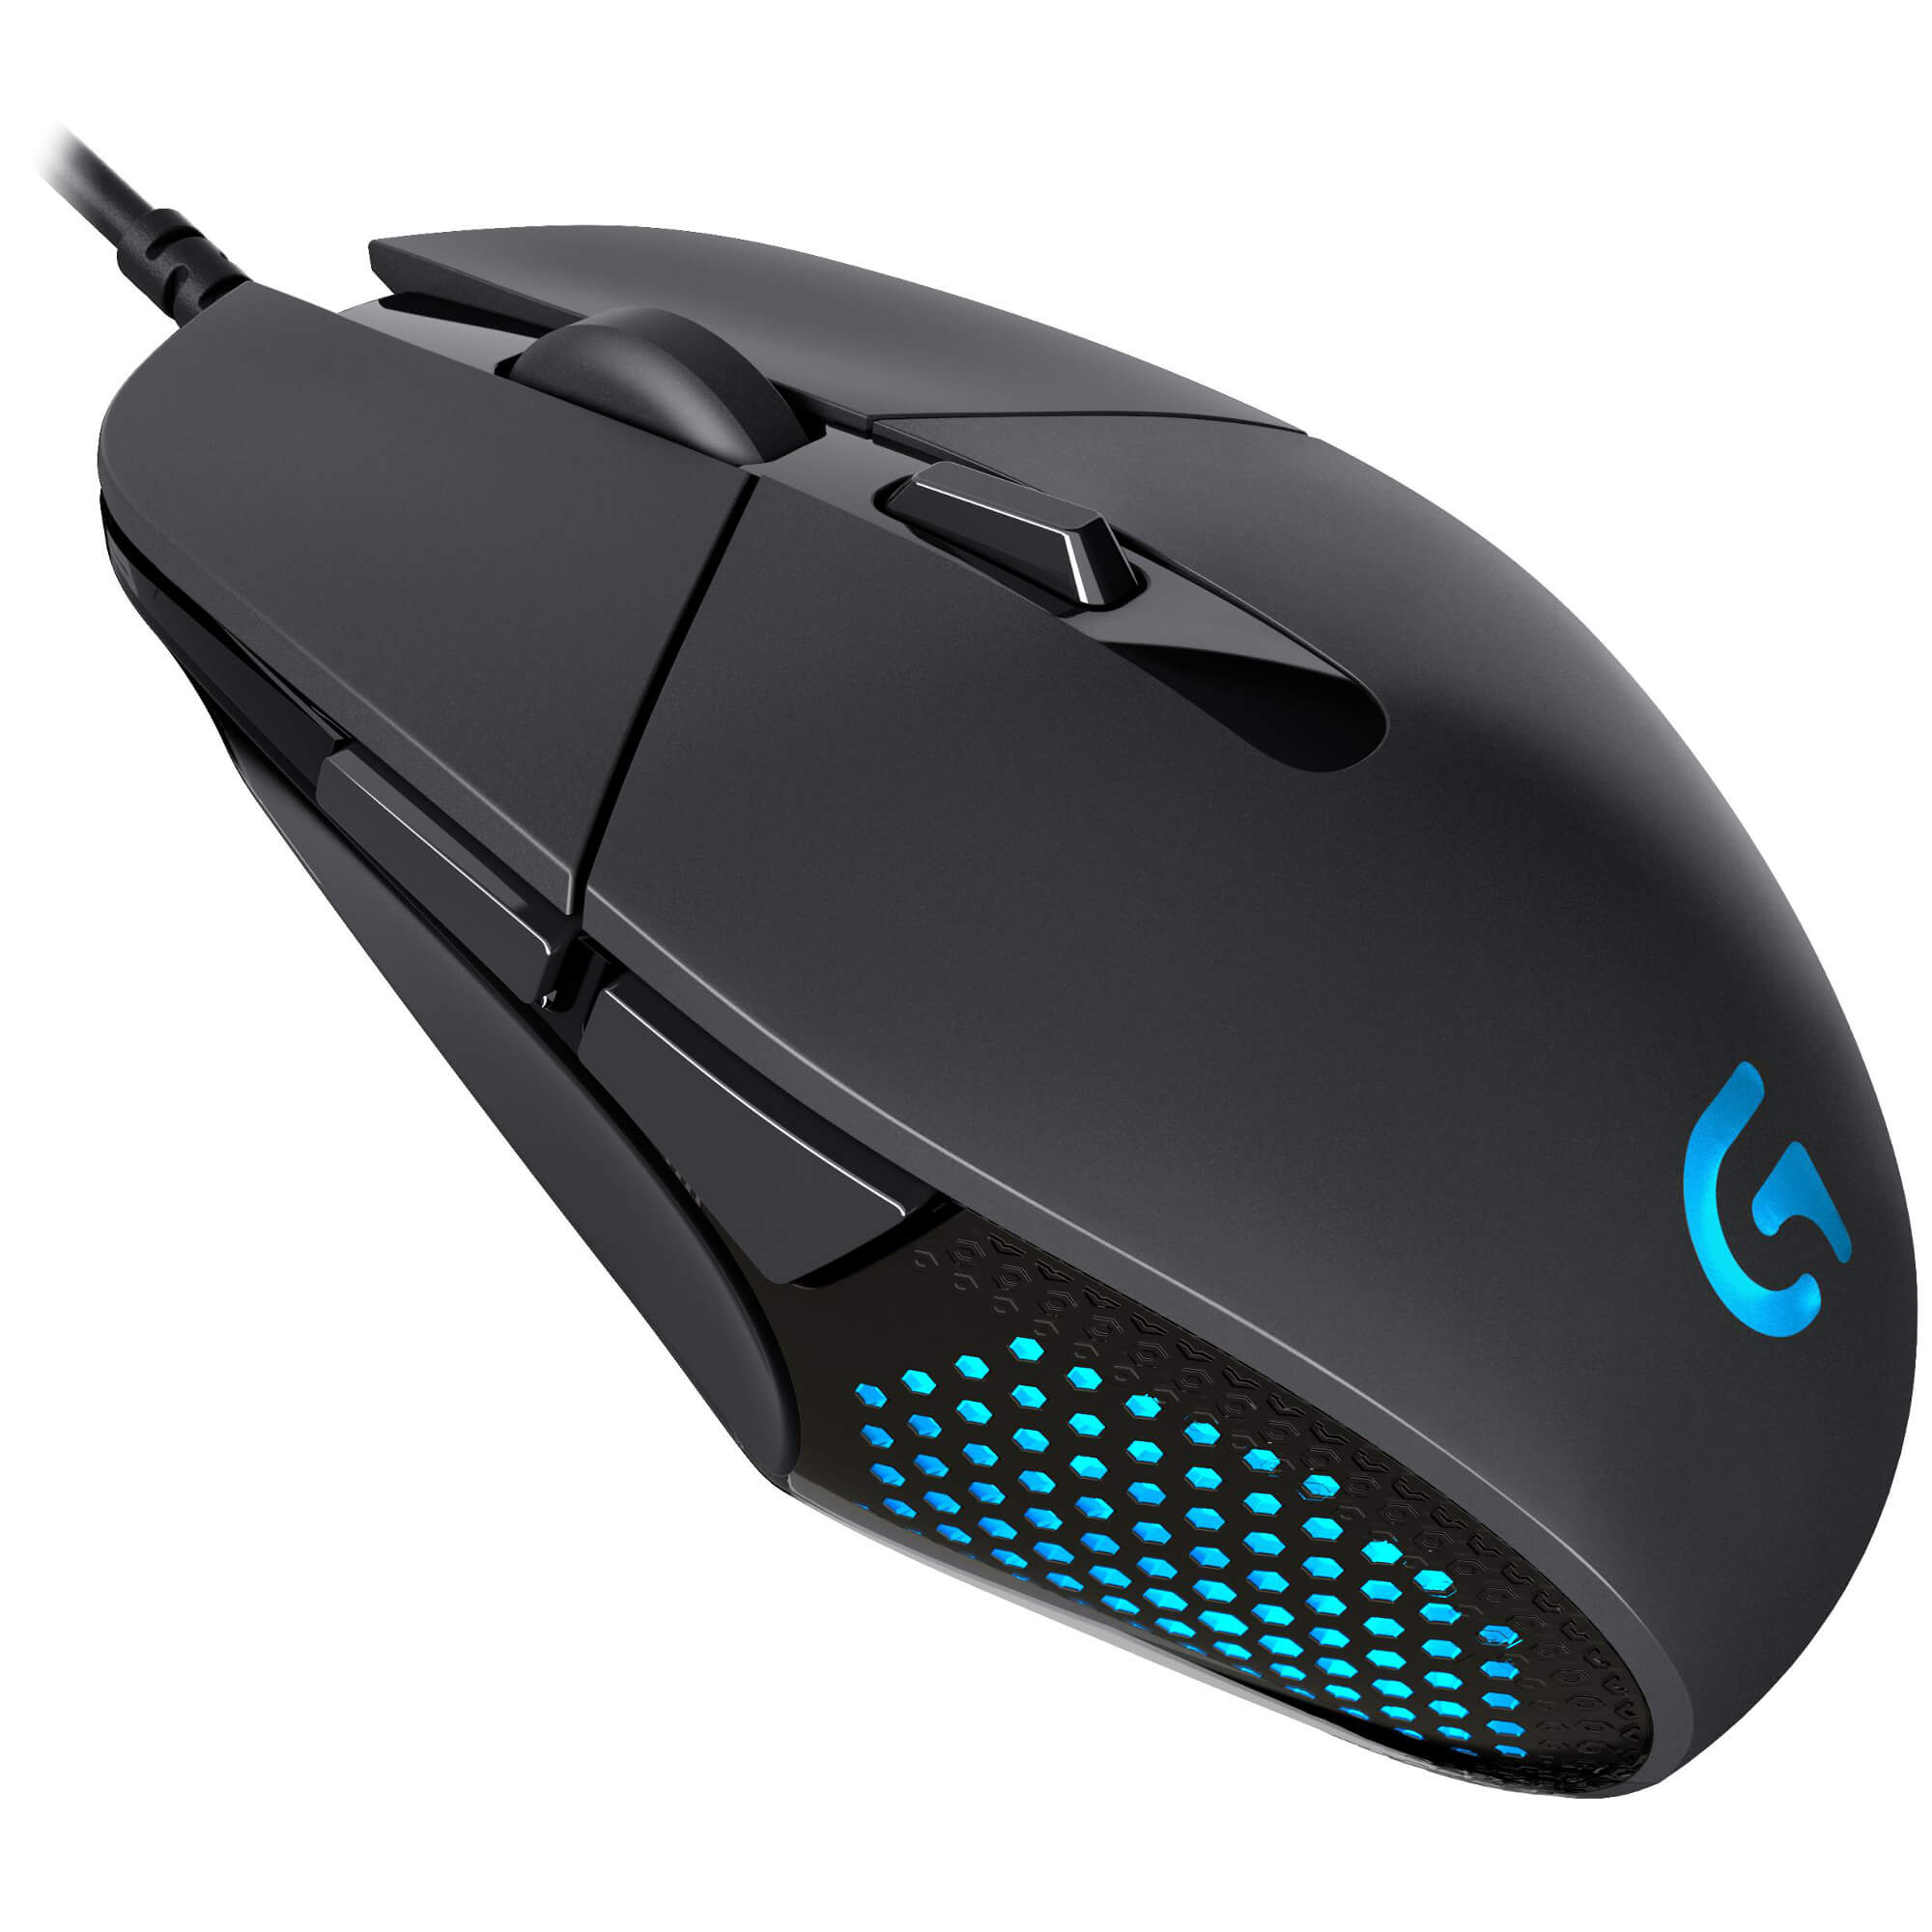  Mouse gaming Logitech G302 Daedalus Prime 